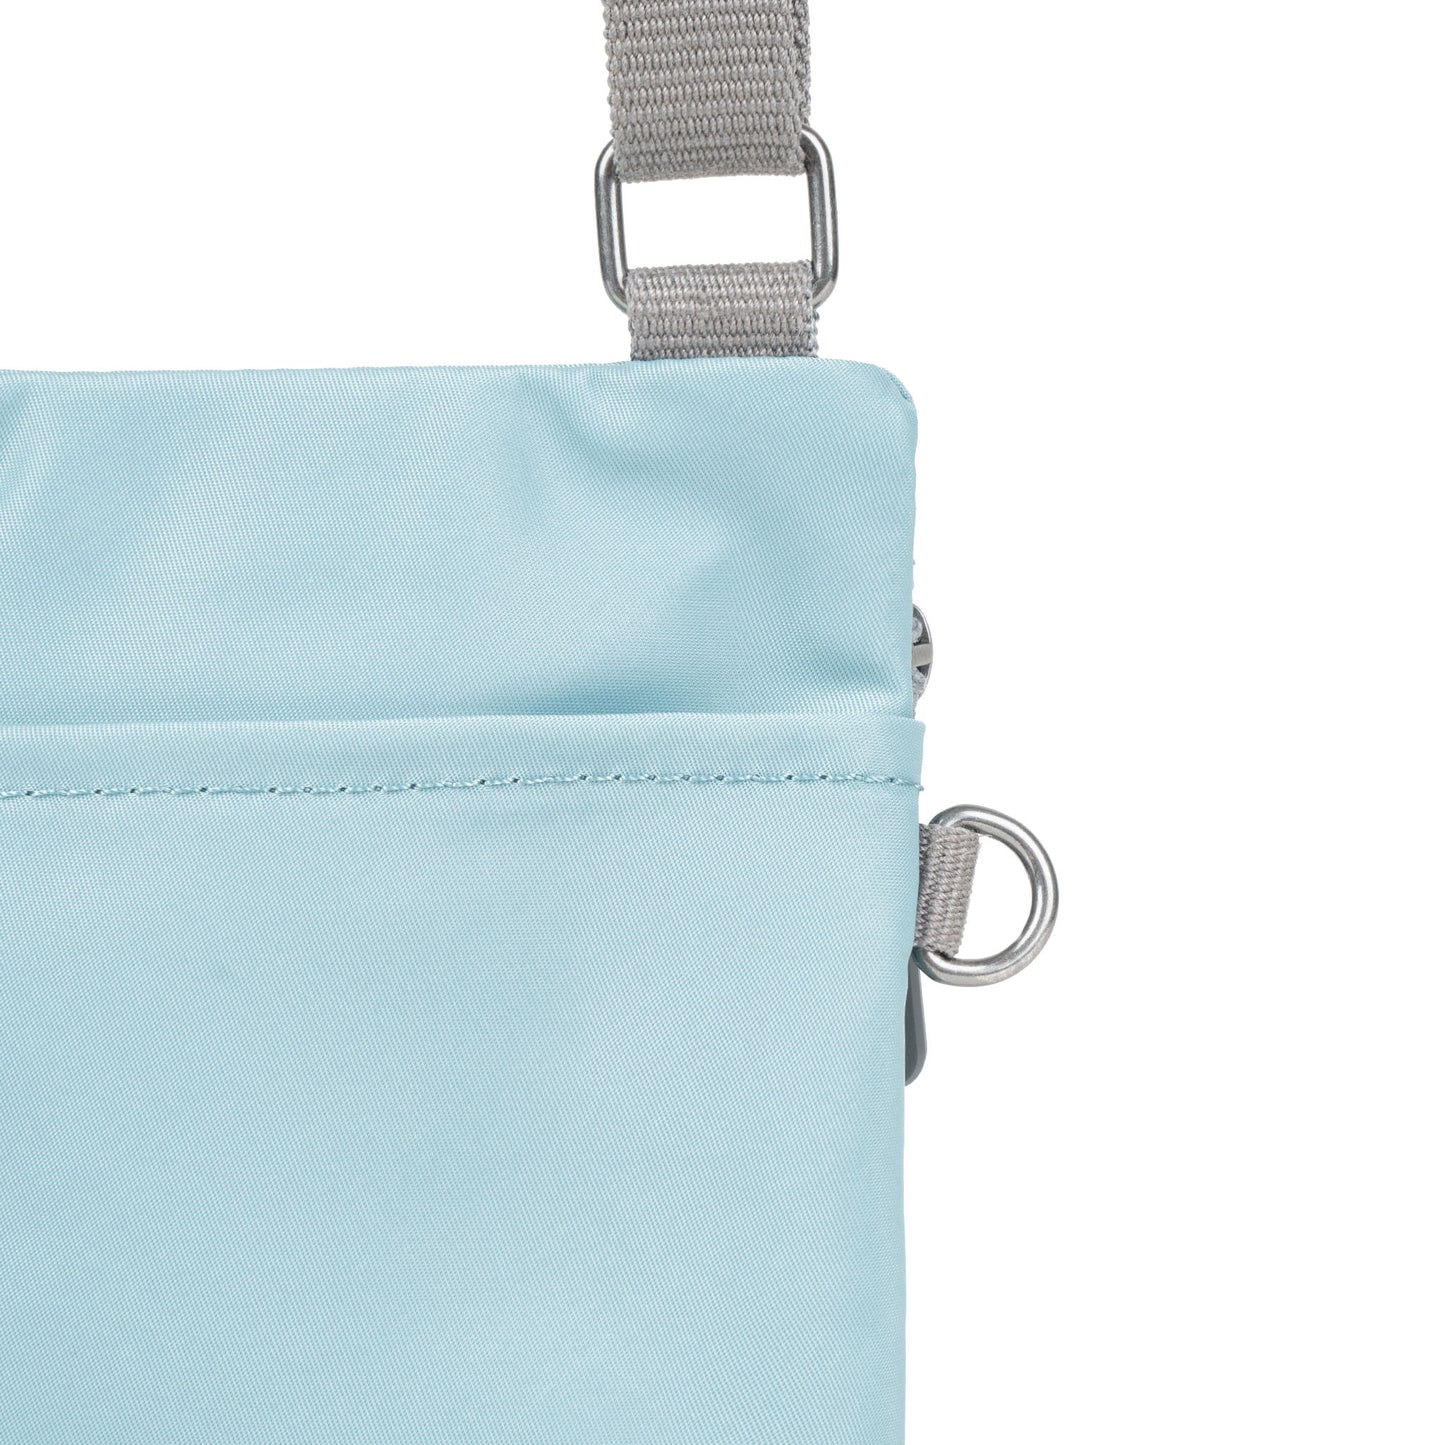 Roka London Chelsea Crossbody Phone Bag, Spearmint(Recycled Nylon)